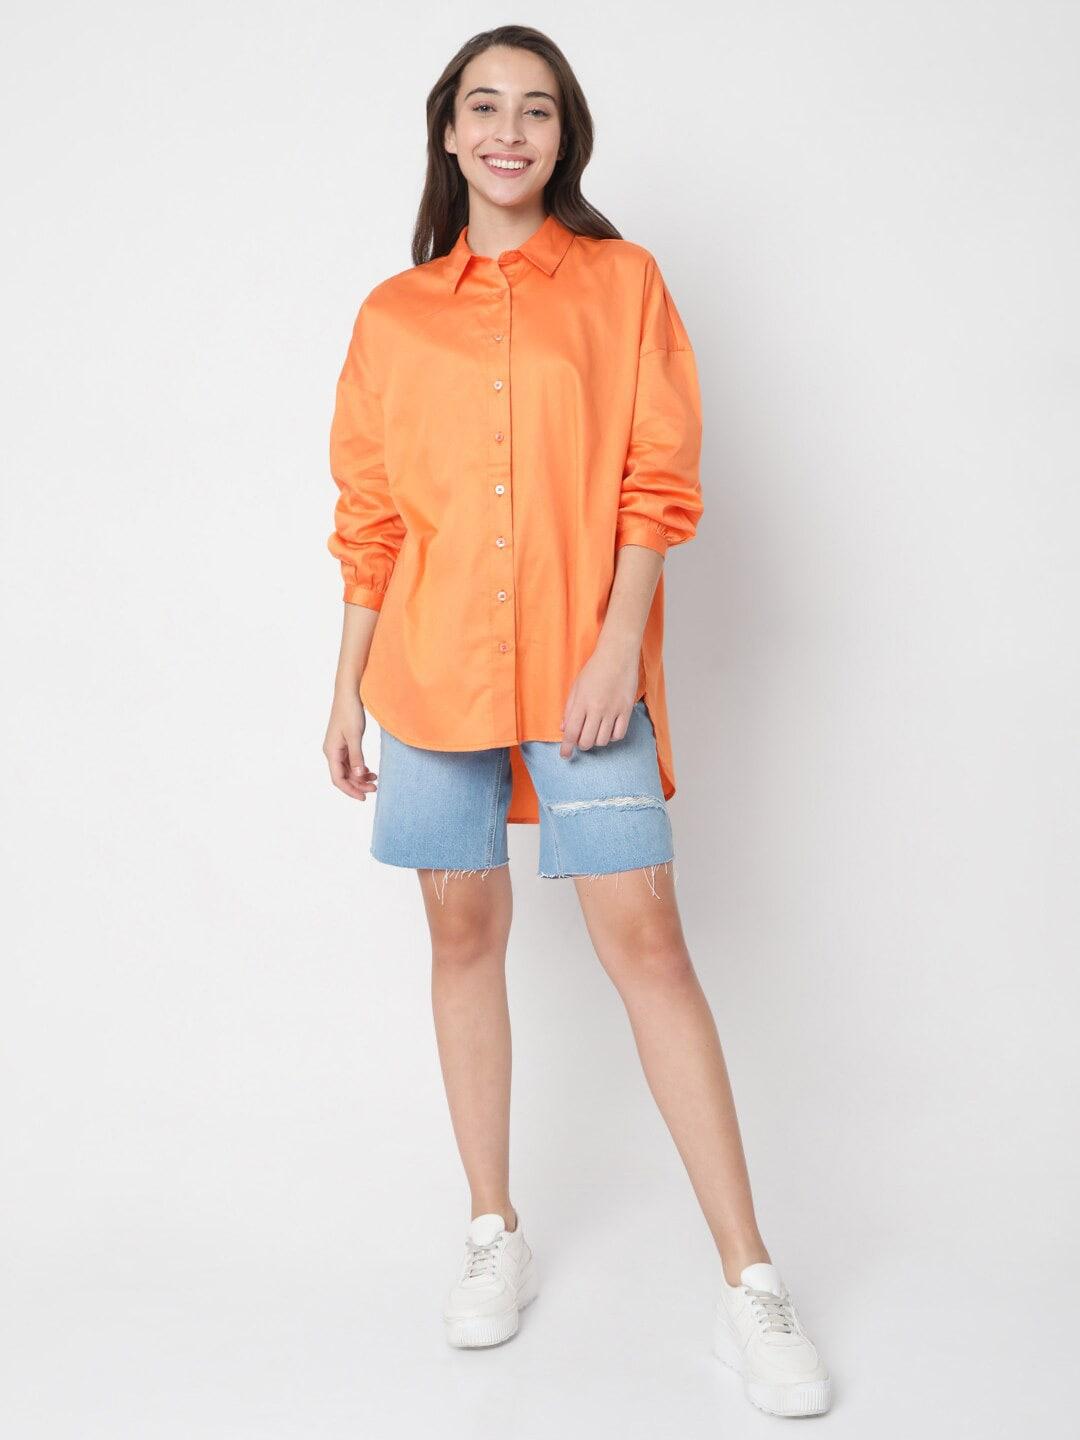 vero moda women orange casual shirt